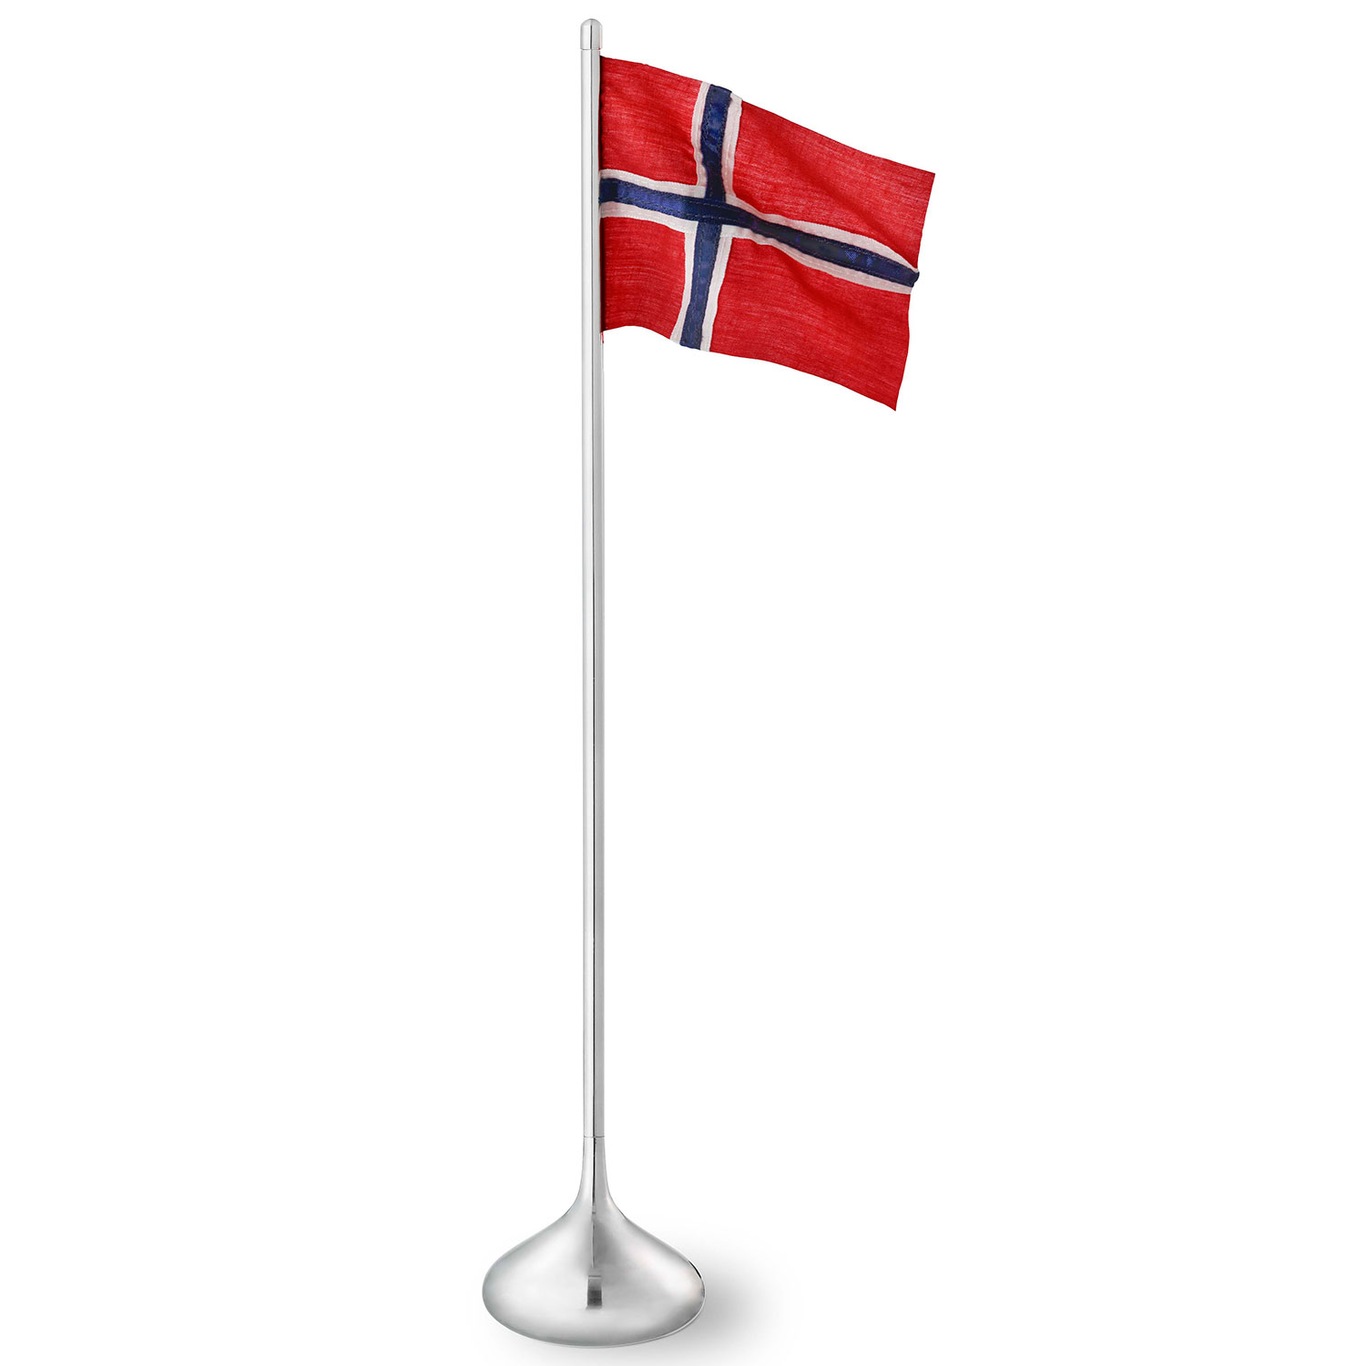 Bordflagg Norway